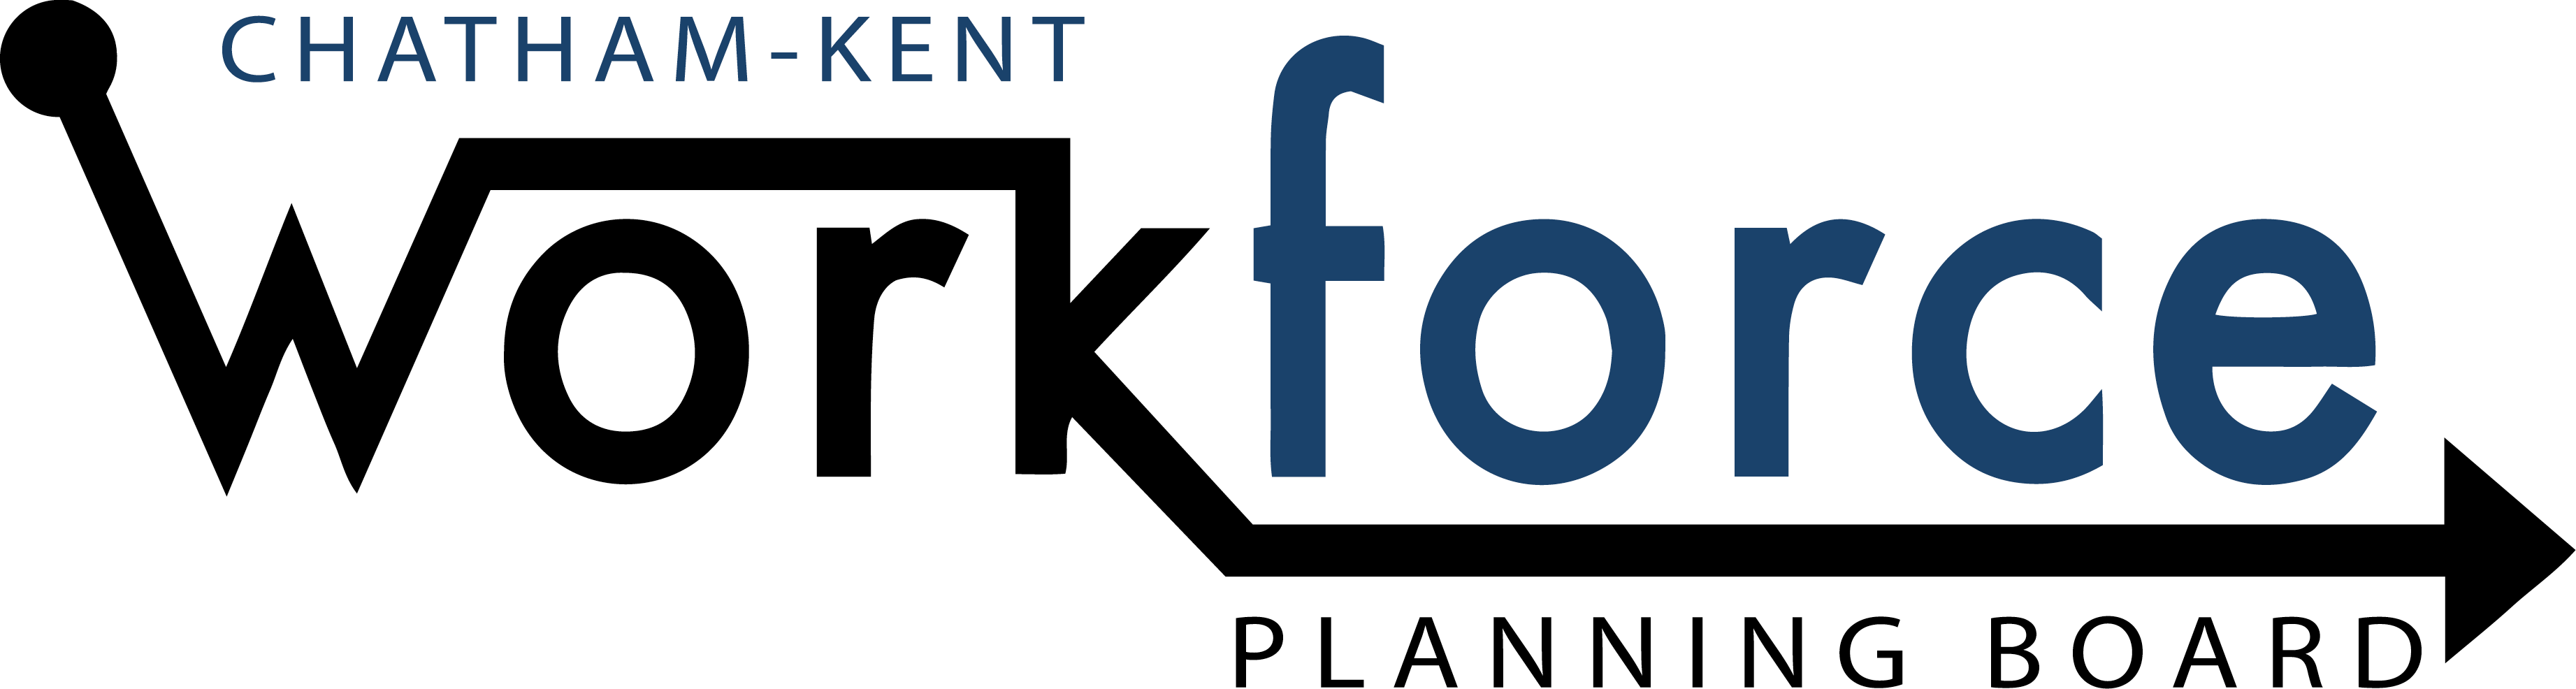 Chatham-Kent Workforce Planning Board logo.